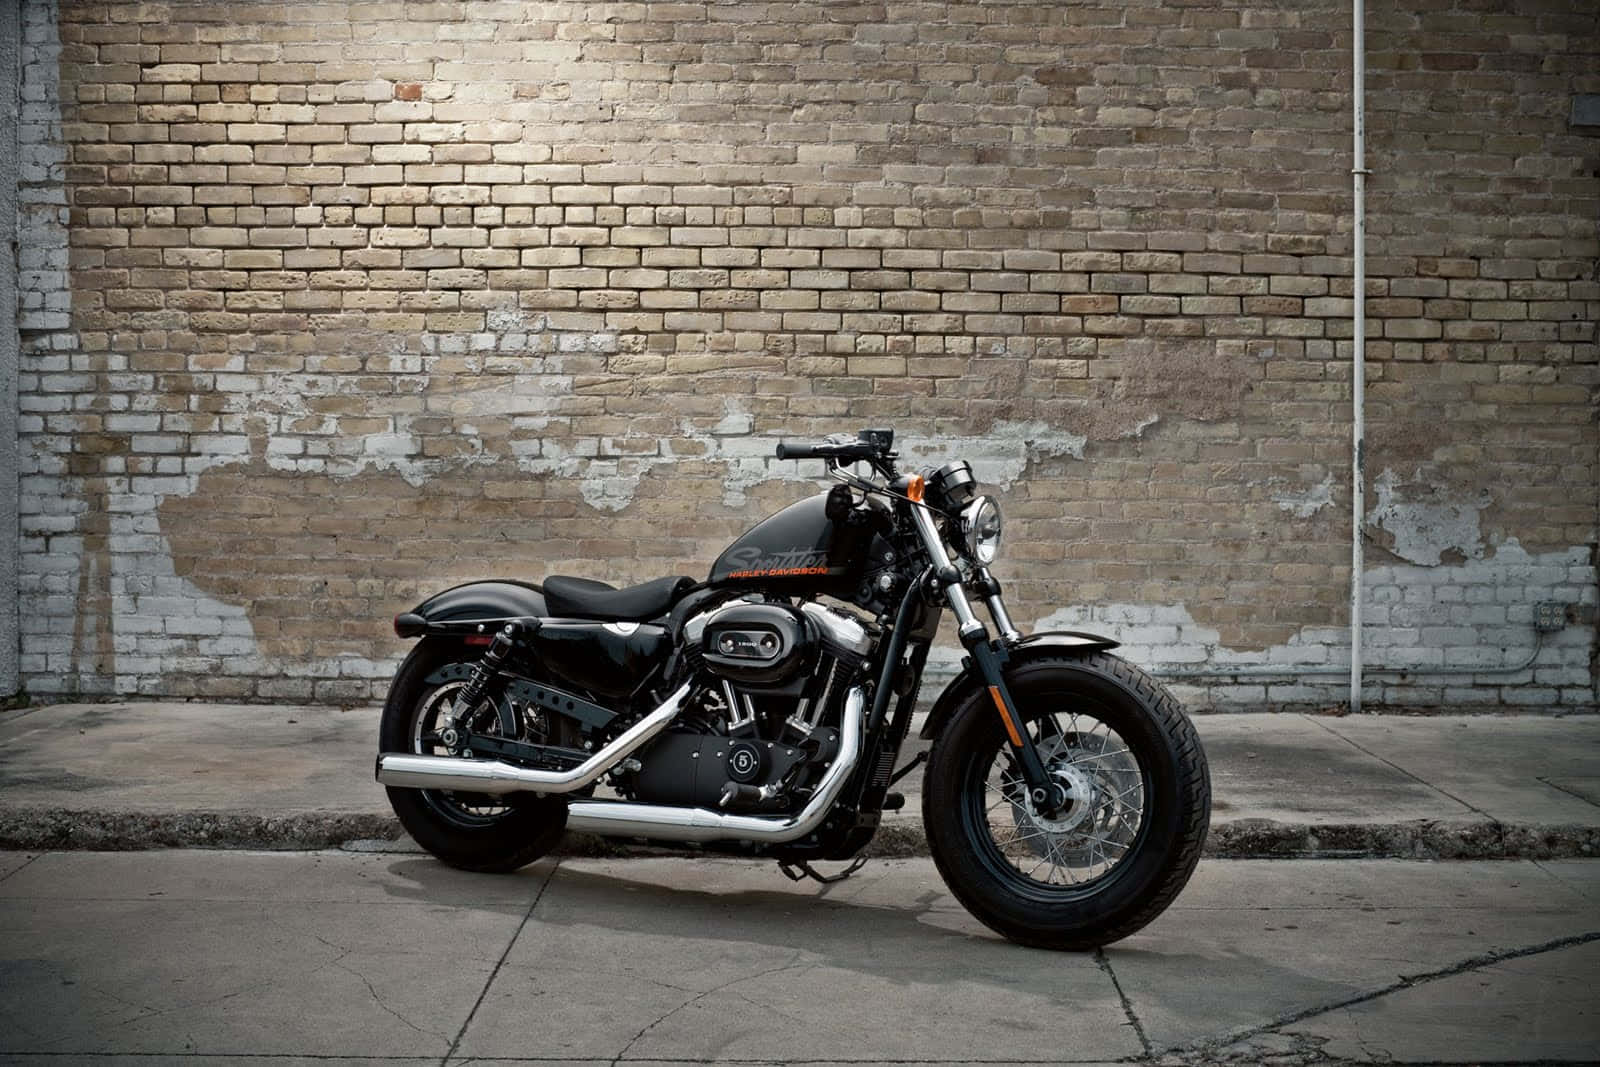 Baggrundmed Harley Davidson Iron 1200 Motorcykel.